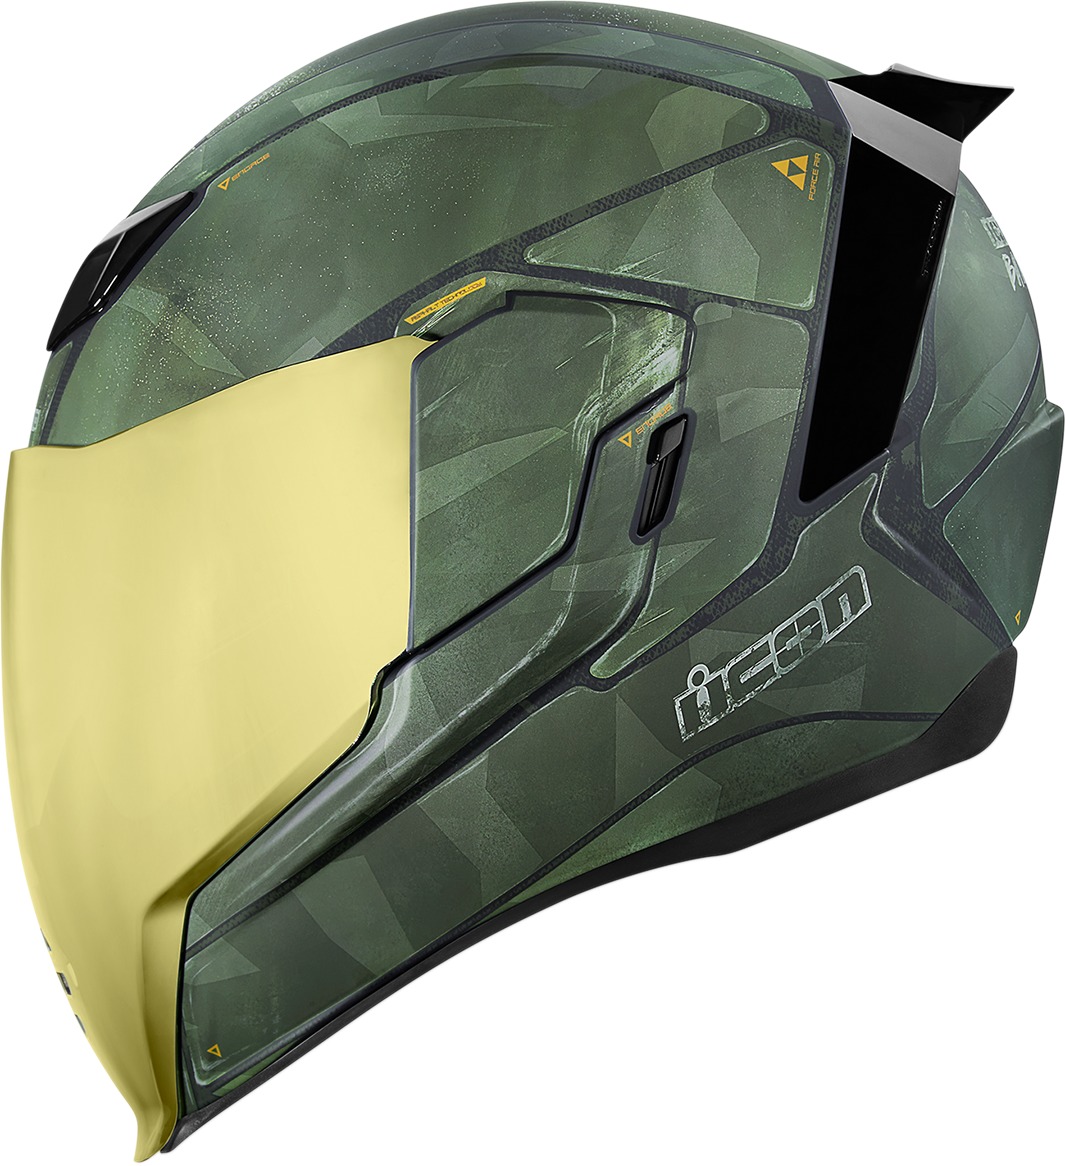 Airflite Full Face Helmet - Battlescar 2 Green Medium - Click Image to Close